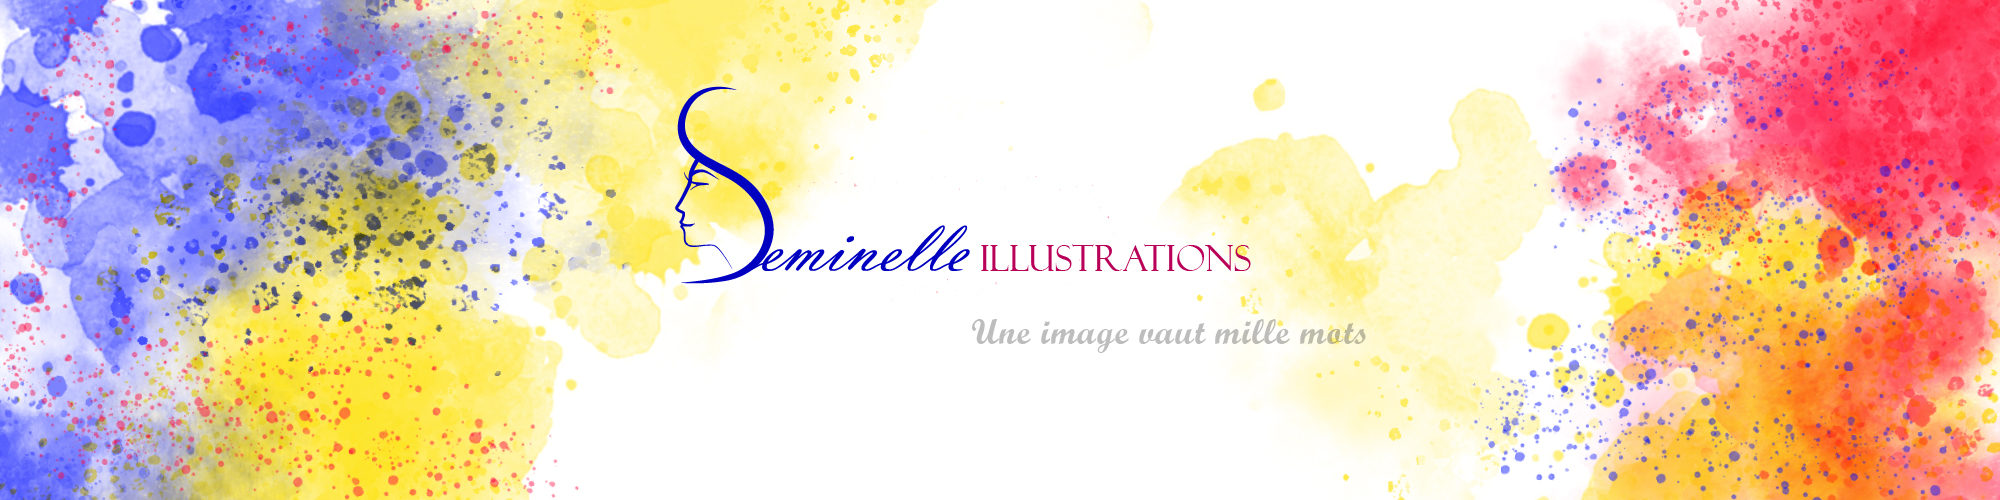 Footer - Illustratrice - Illustration - Seminelle - Fresco - Illustrator